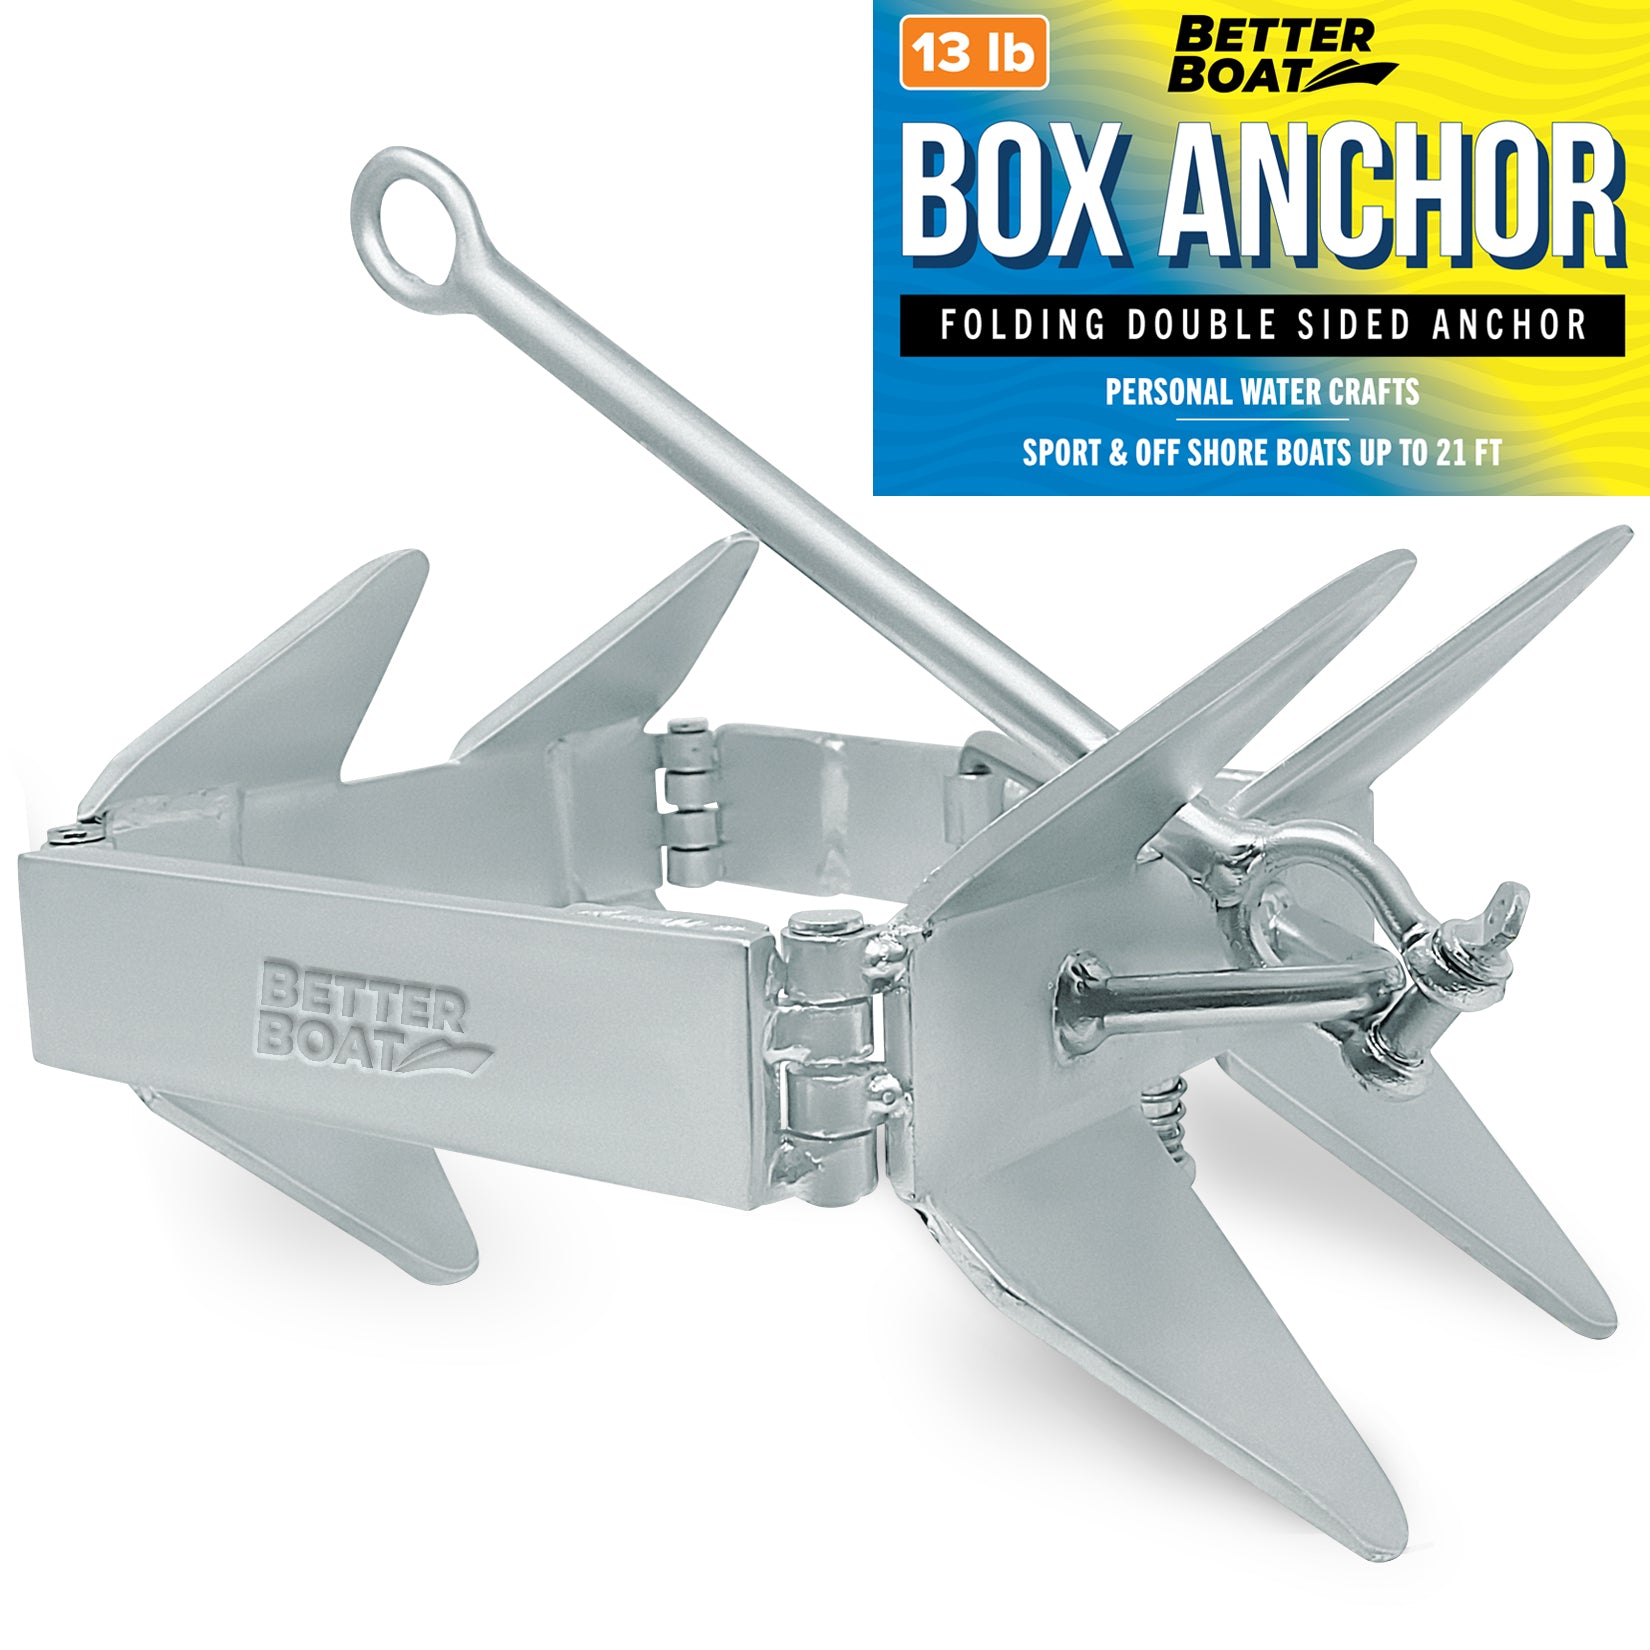 Box Anchor for Boats Folding Anchor - 13 lbs